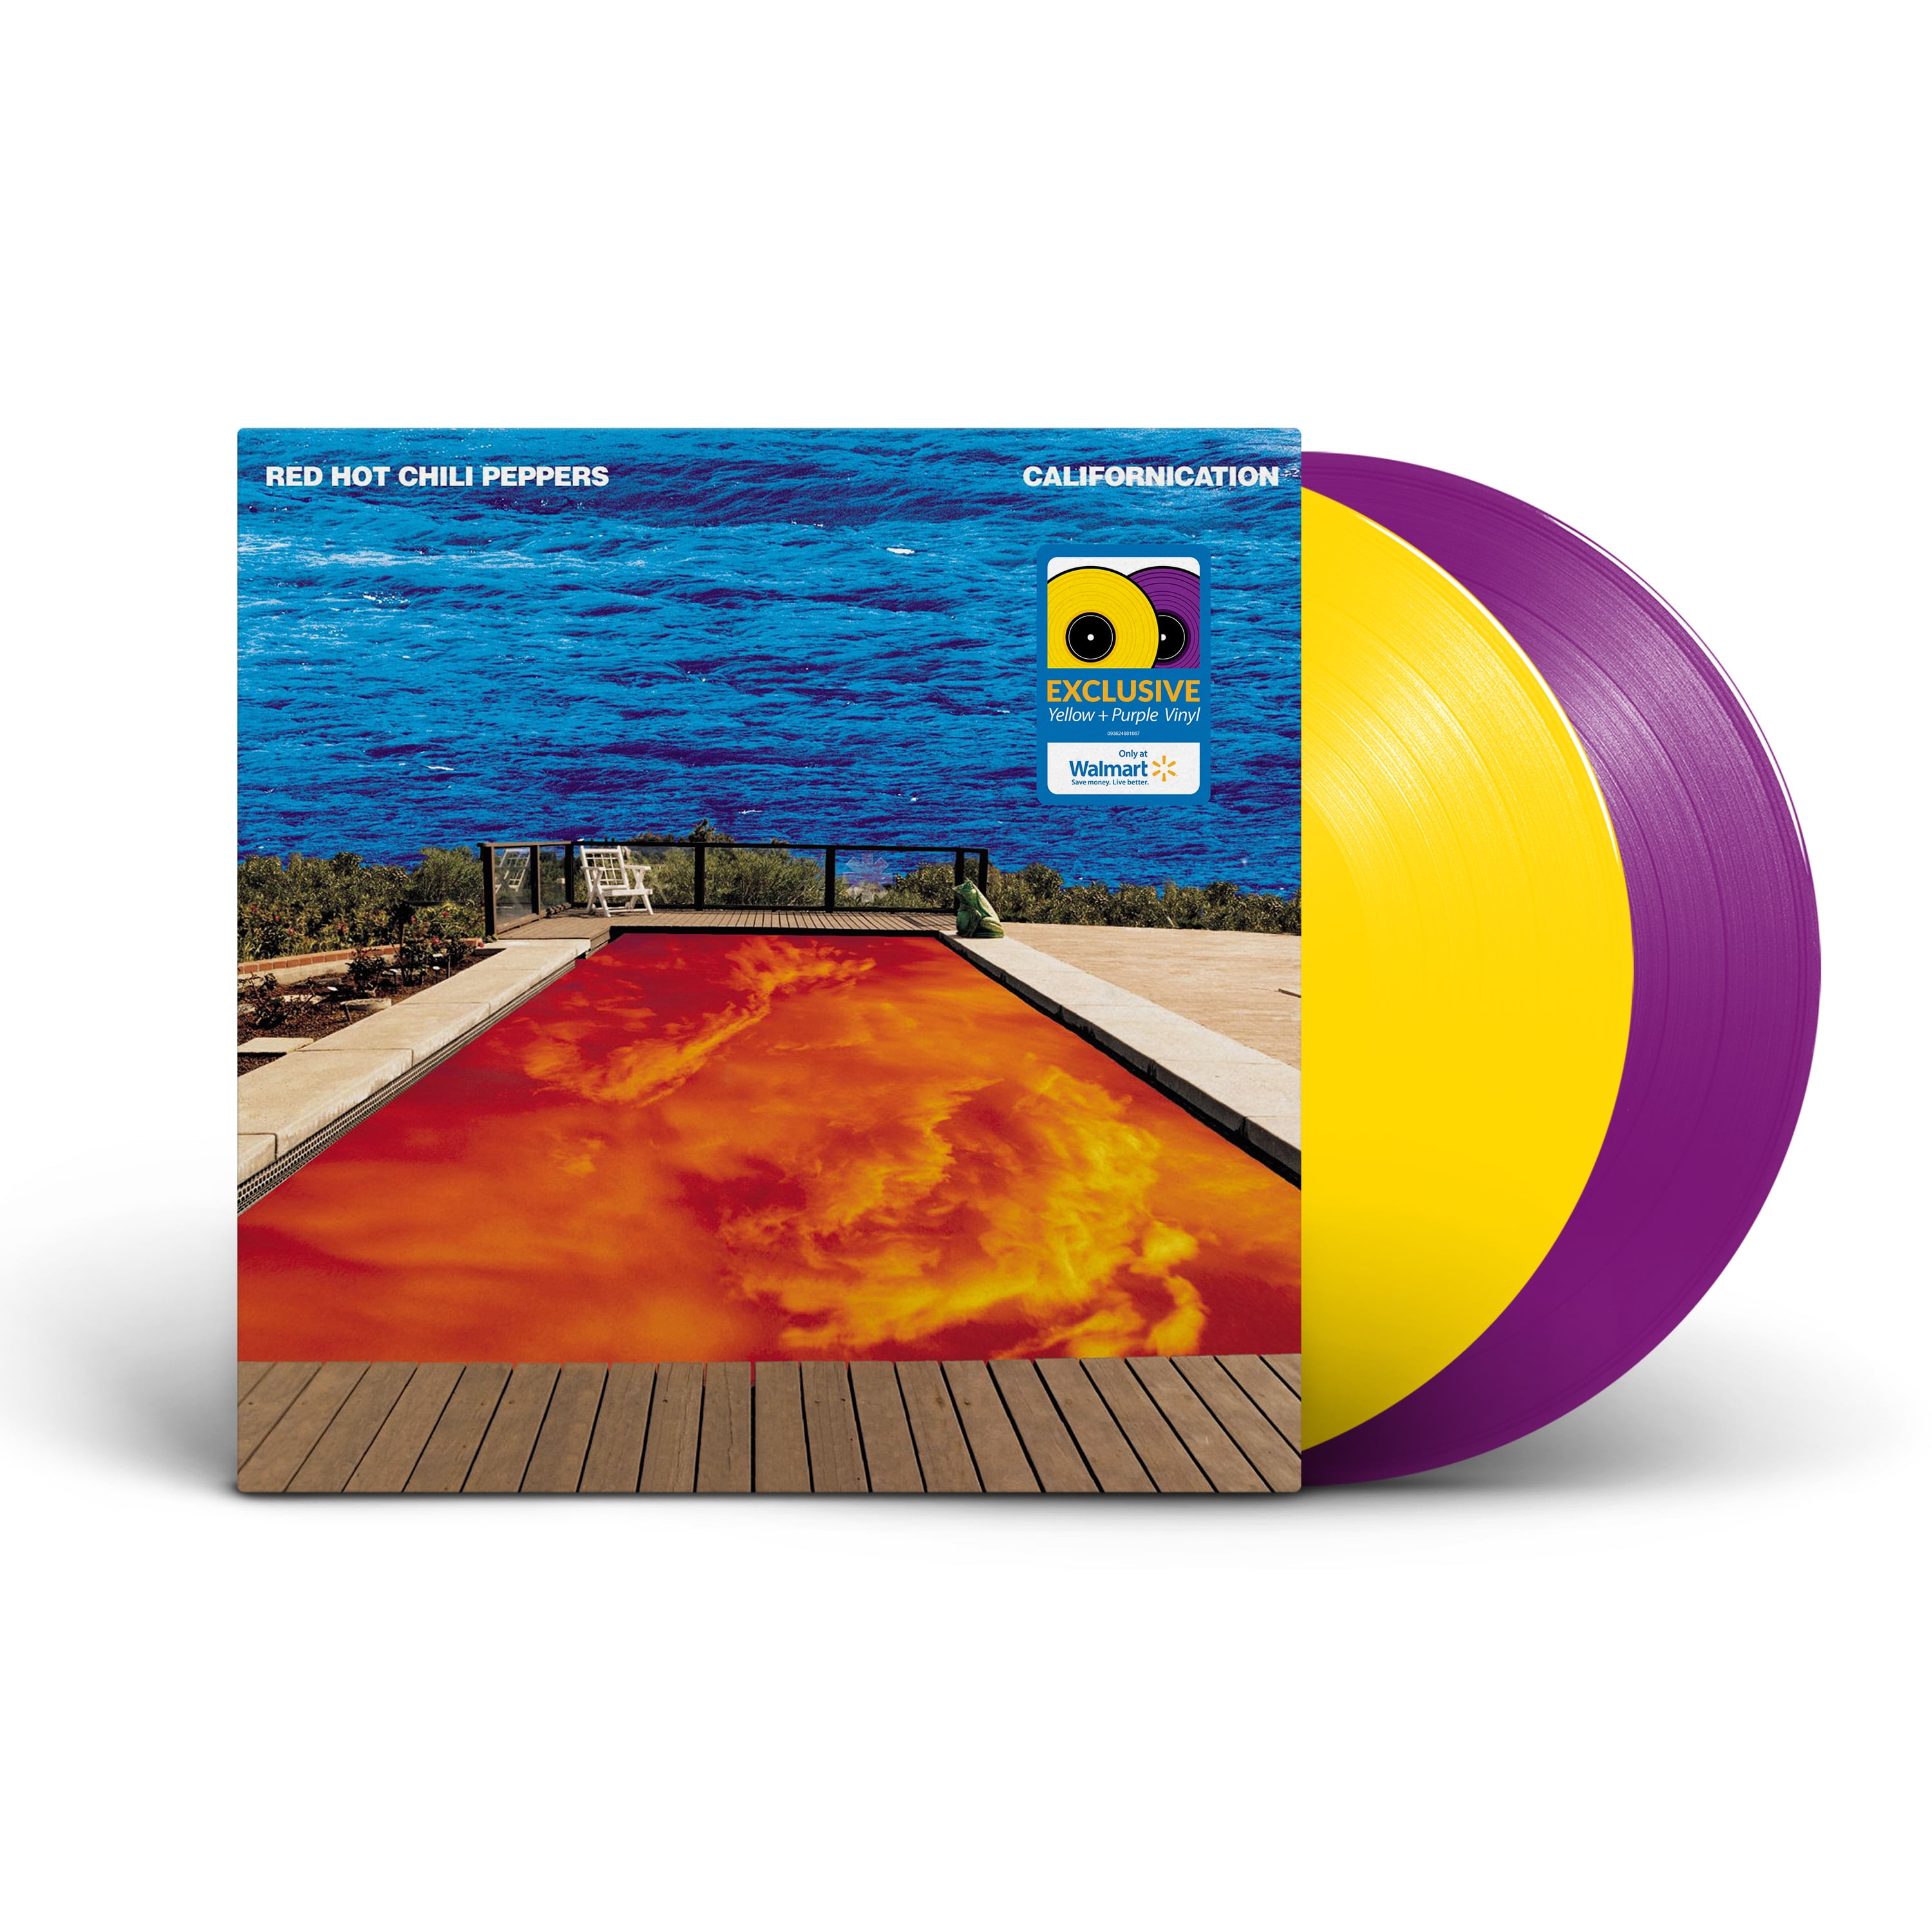 Red Hot Chili Peppers - Californication - 2LP (Walmart Exclusive) - Rock  Vinyl